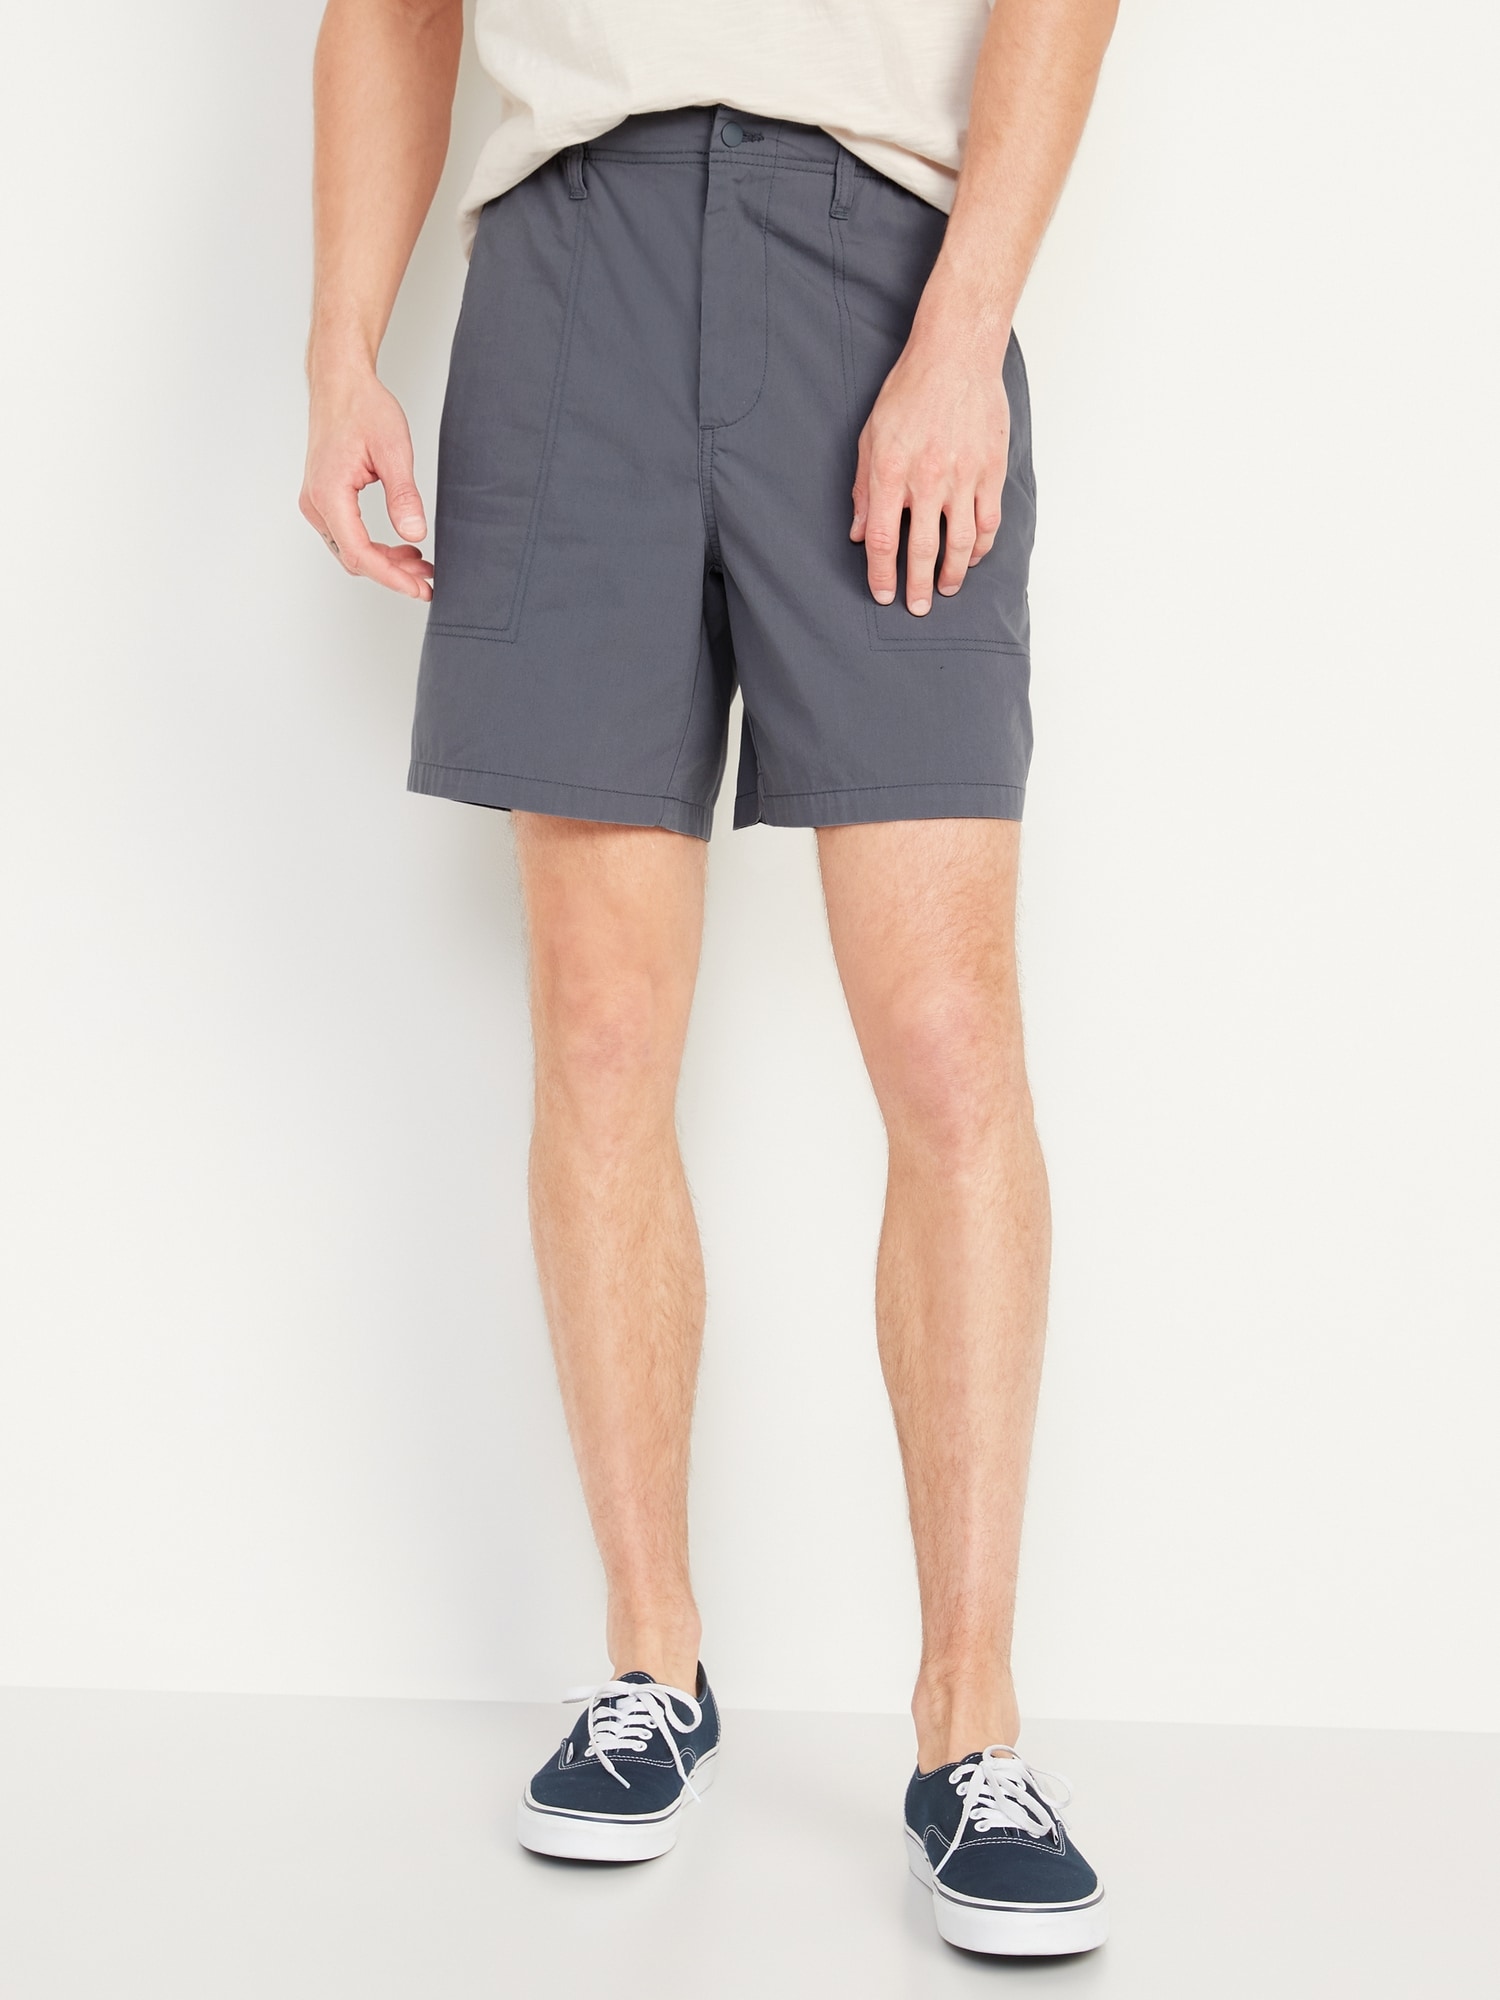 Old Navy Hybrid Tech Chino Shorts for Men -- 7-inch inseam gray. 1